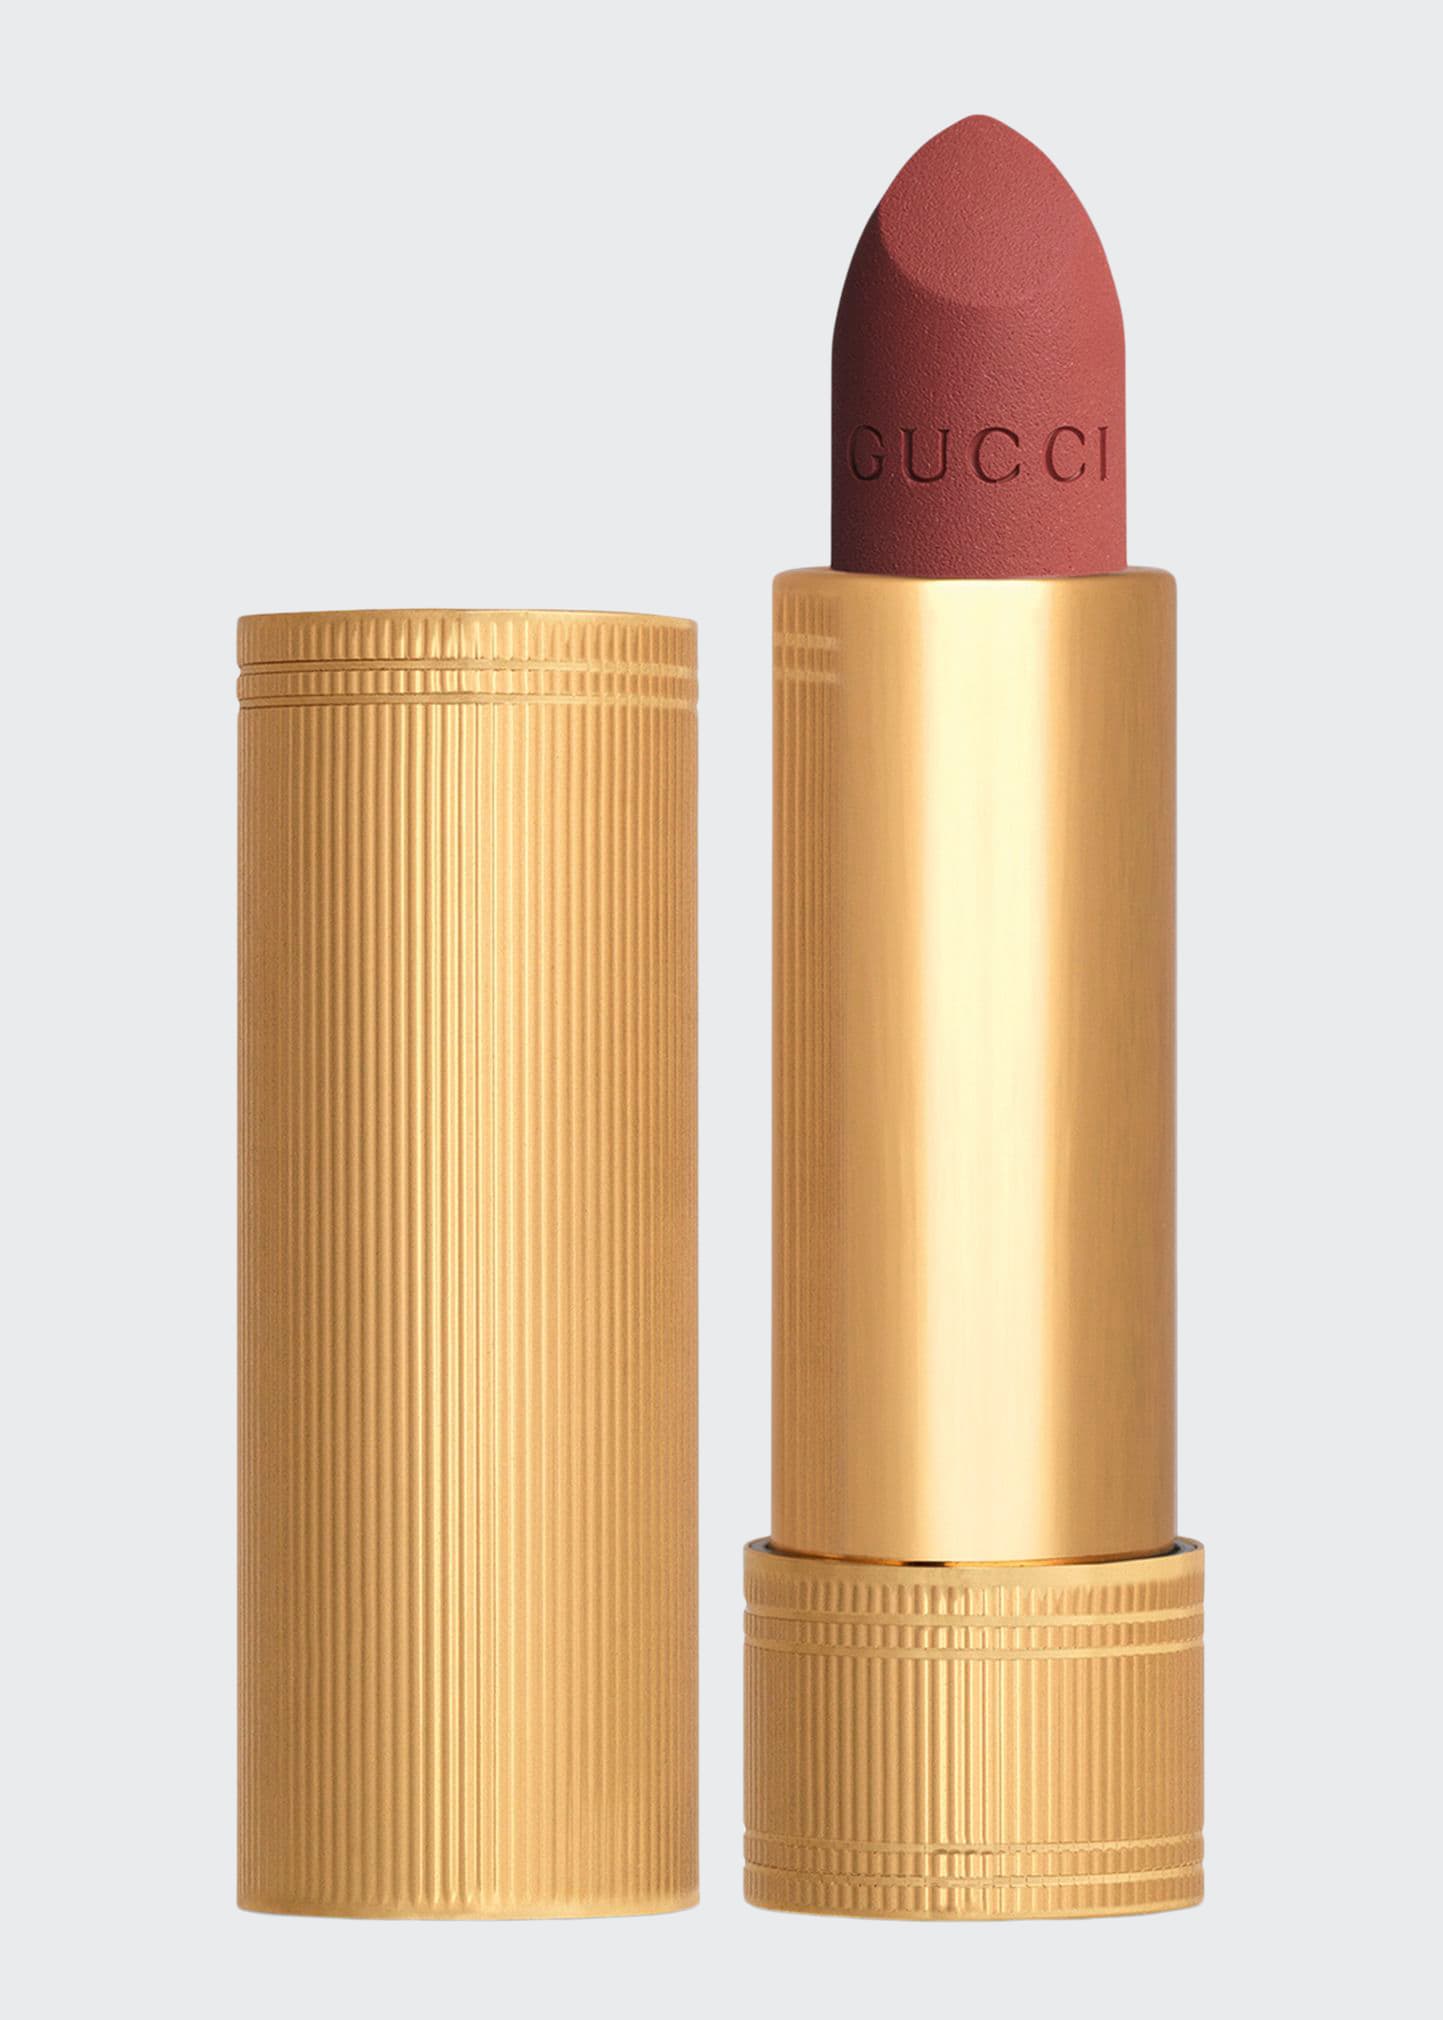 Gucci Rouge A Levres Matte Lipstick In 208 Argentina